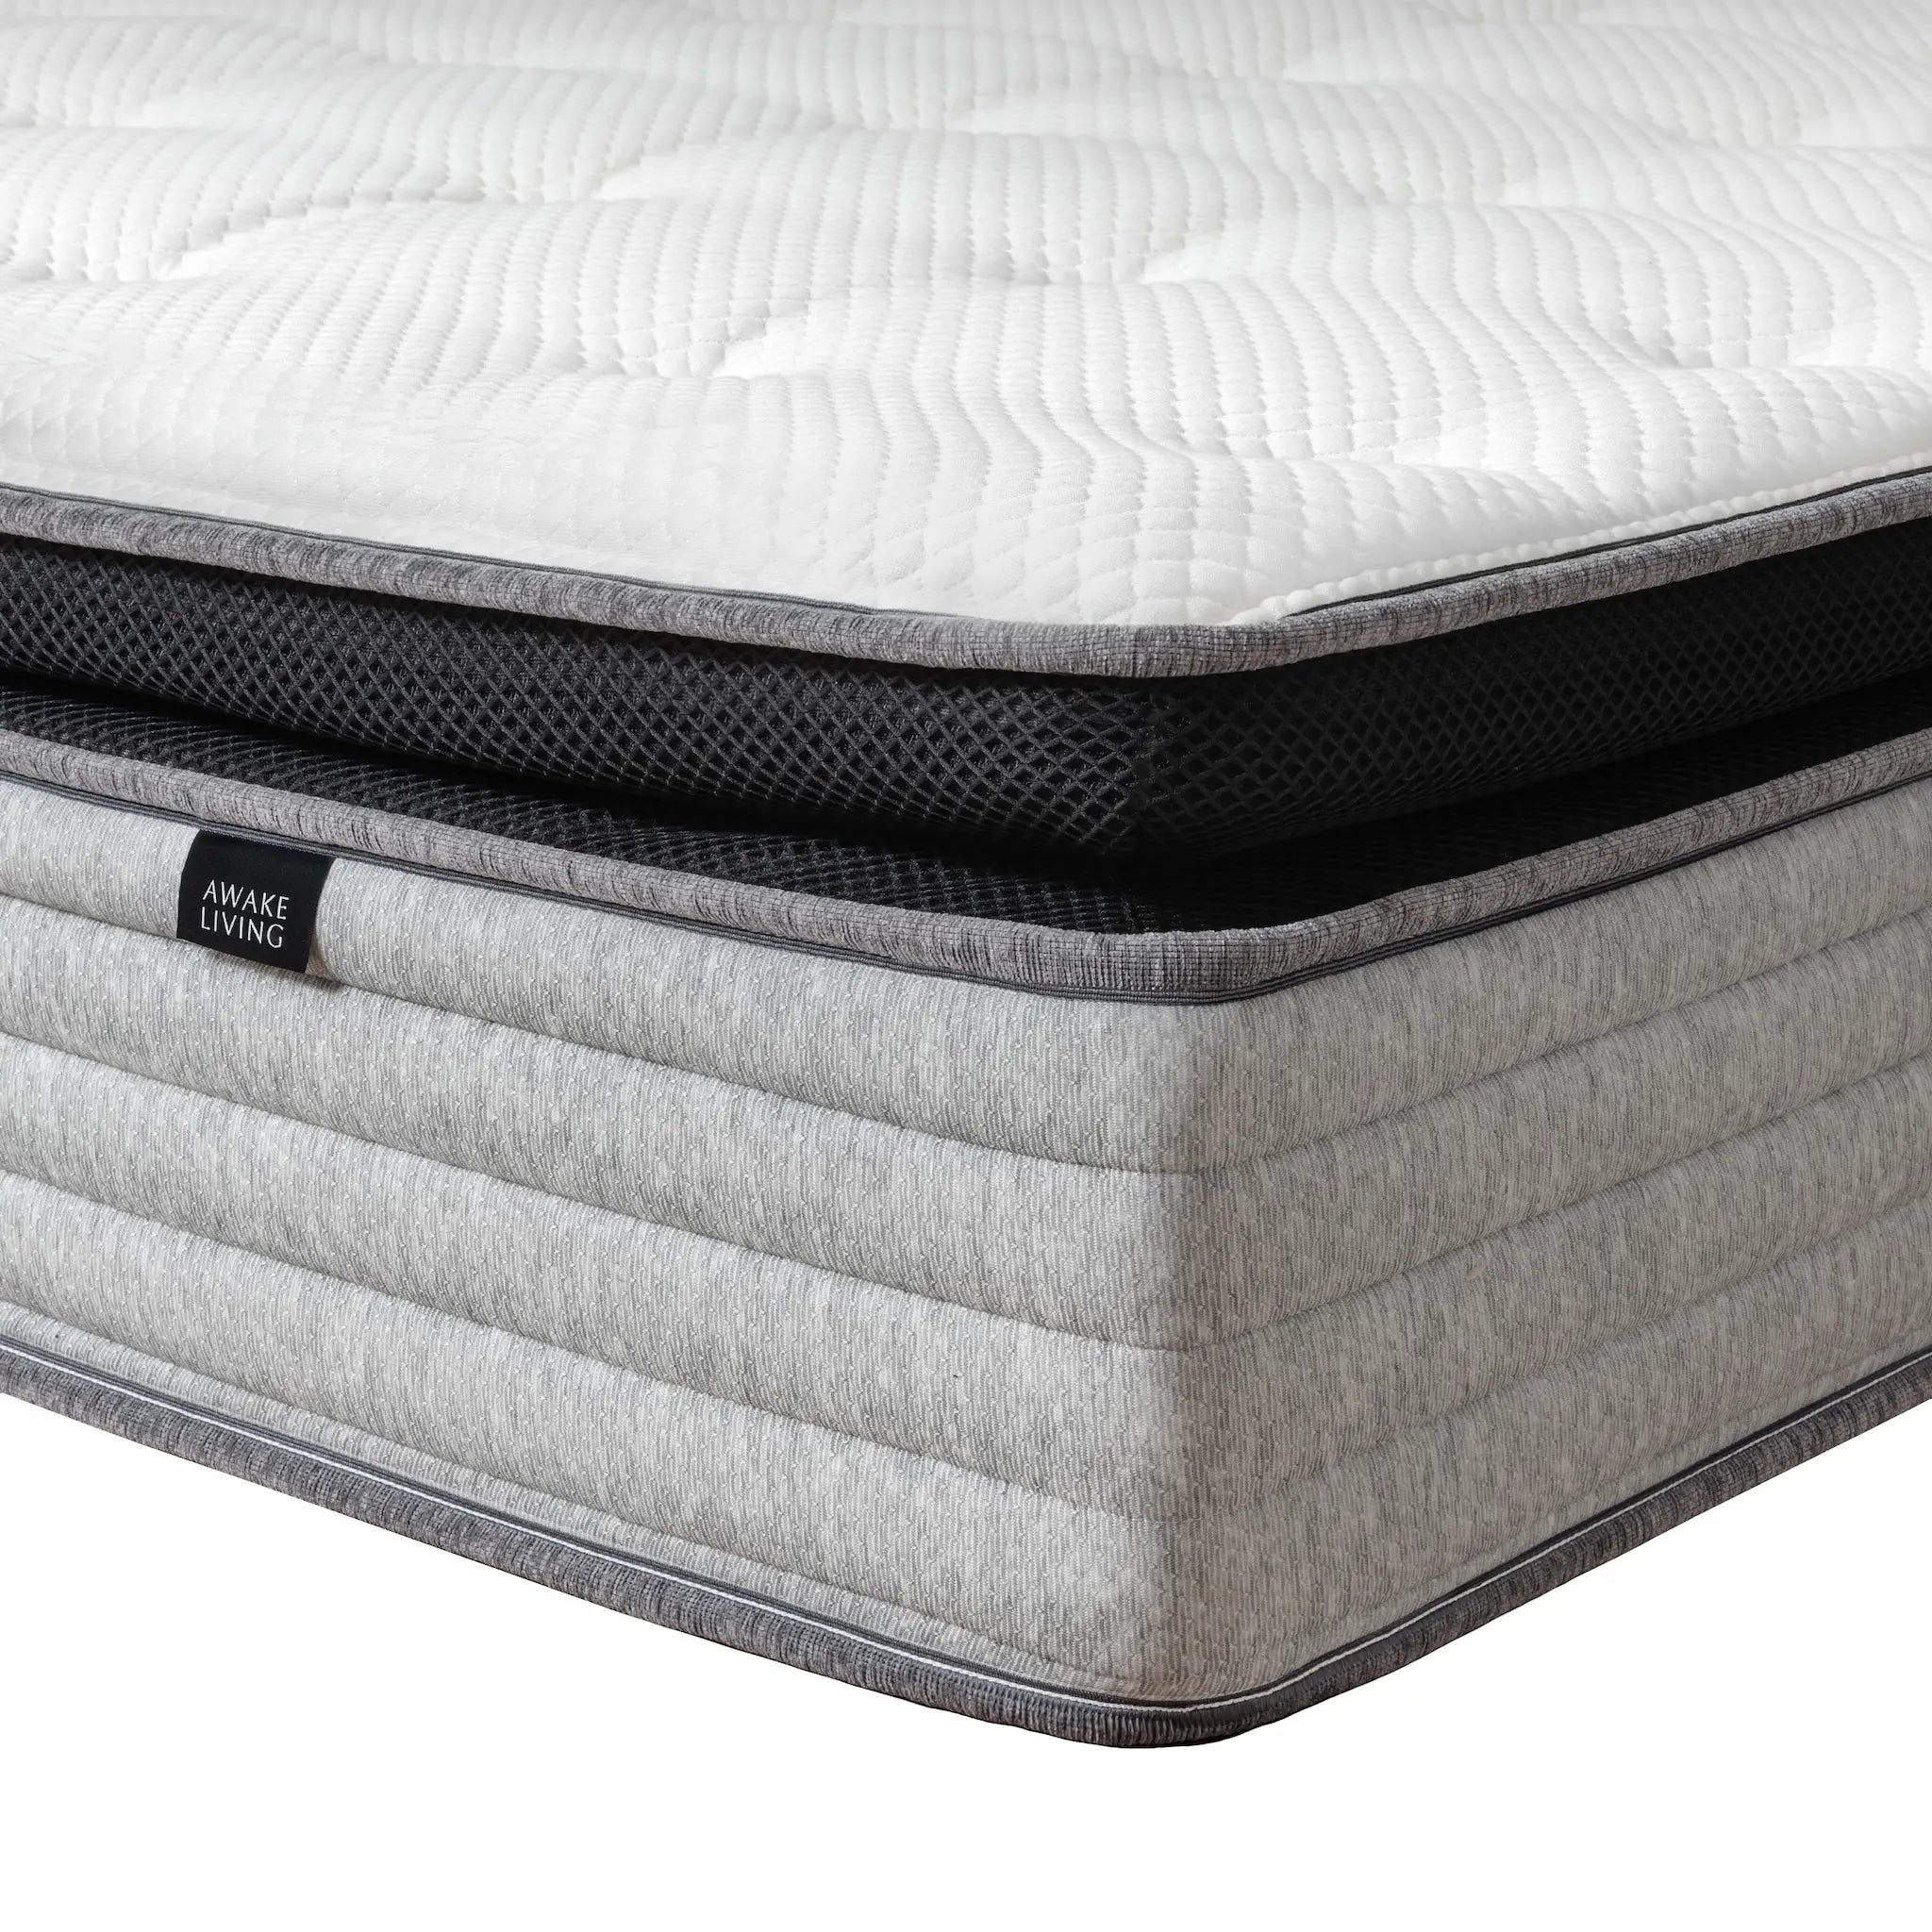 Premium 2.3 零壓深眠英國鋼記憶棉獨立筒床墊 - 1